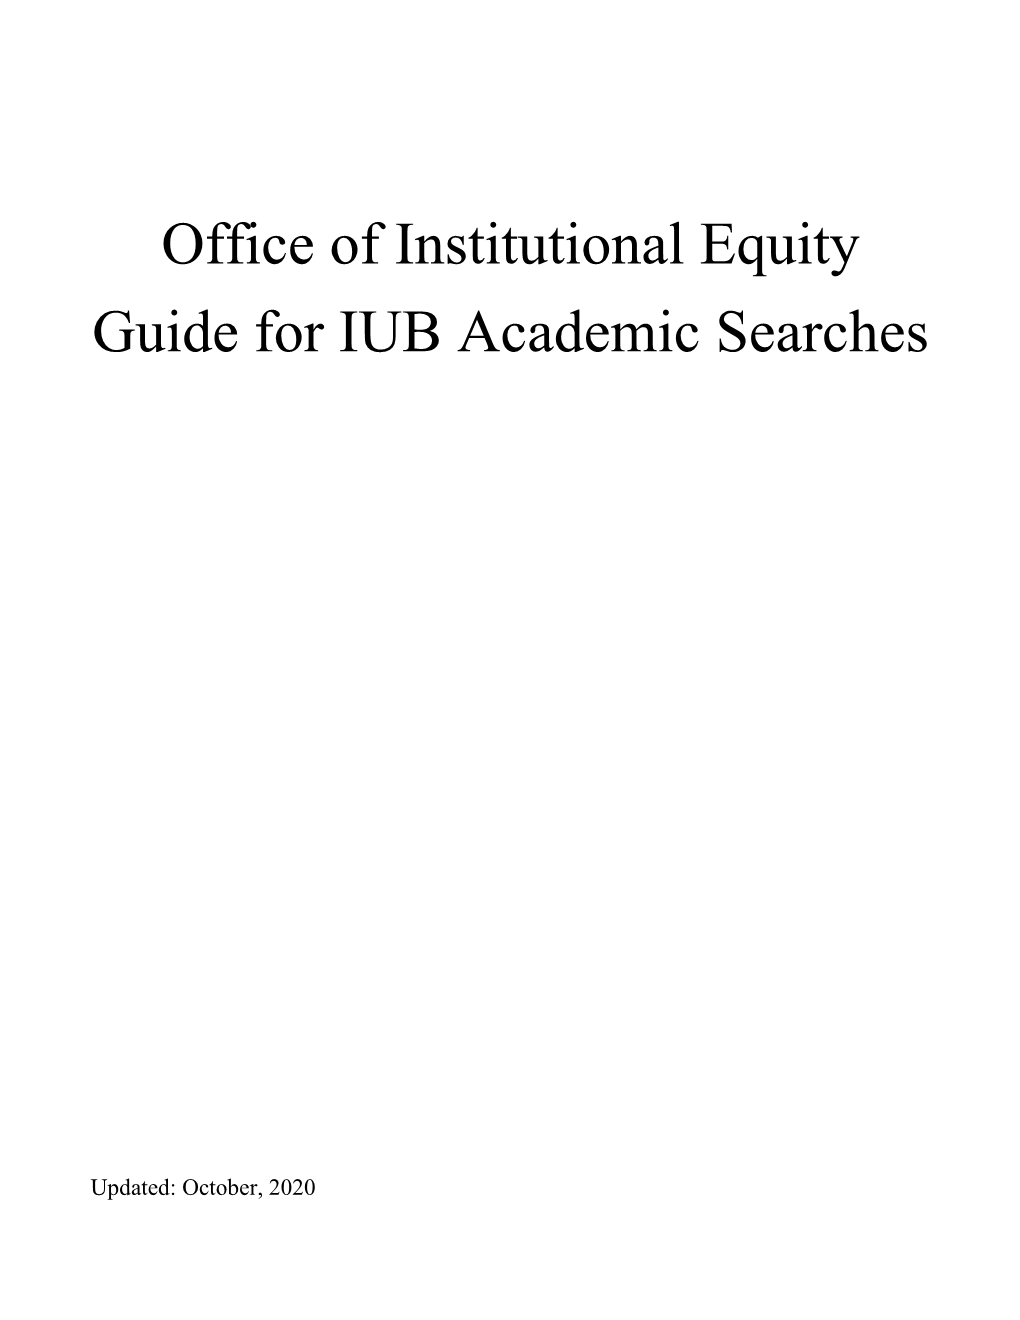 IUB Bloomington Academic Search Guide